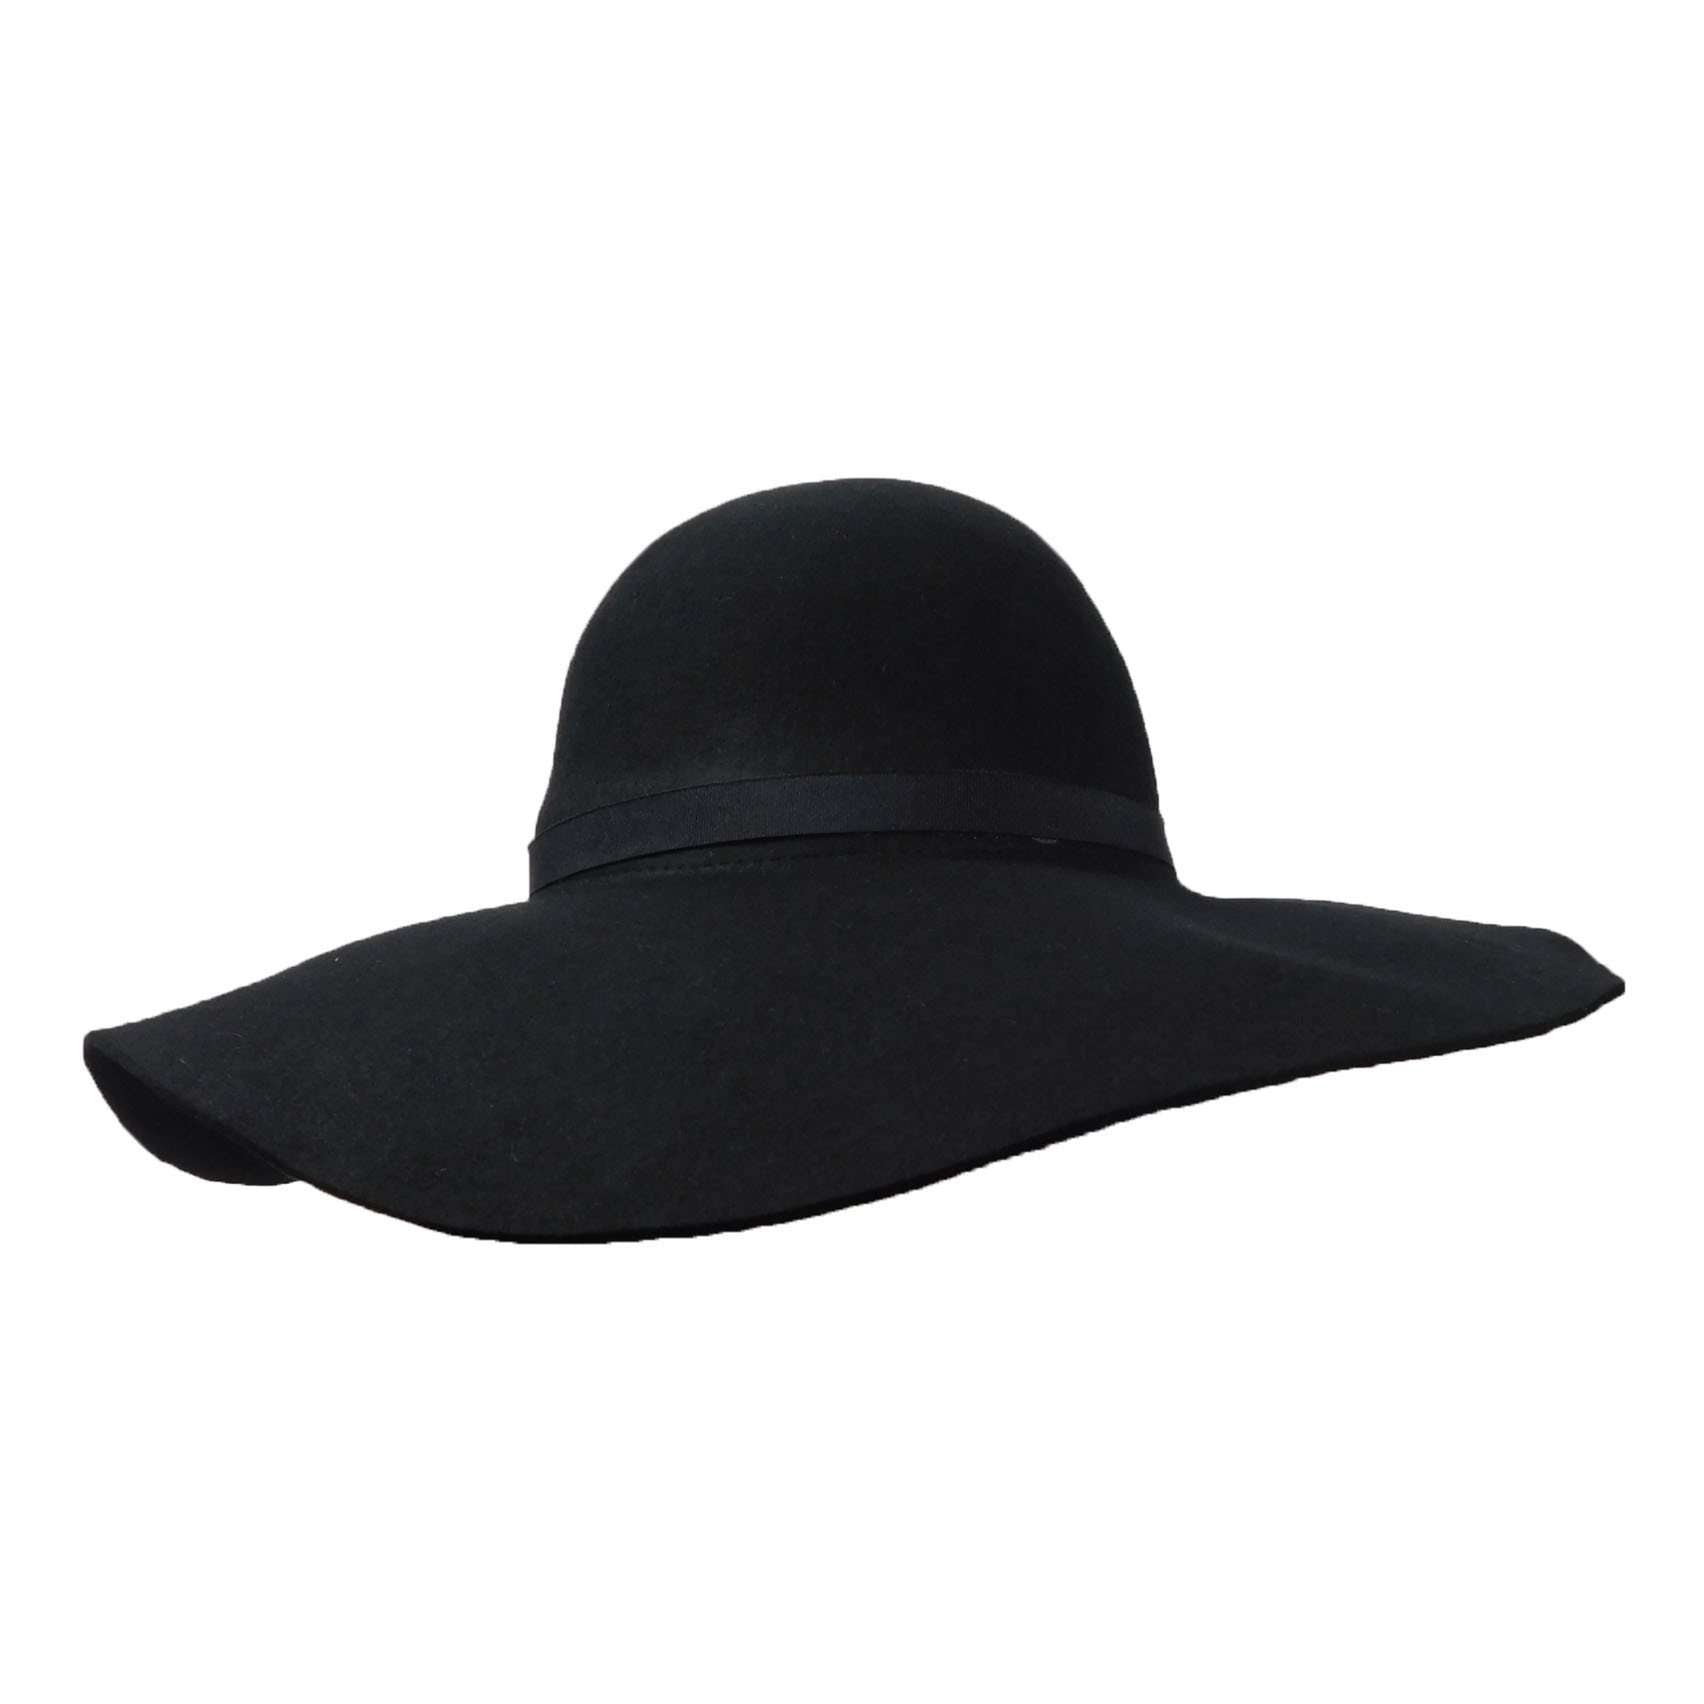 Wool Felt Wide Brim Hat for Women Wide Brim Sun Hat Boardwalk Style Hats WWWF264BK Black Medium (57 cm) 